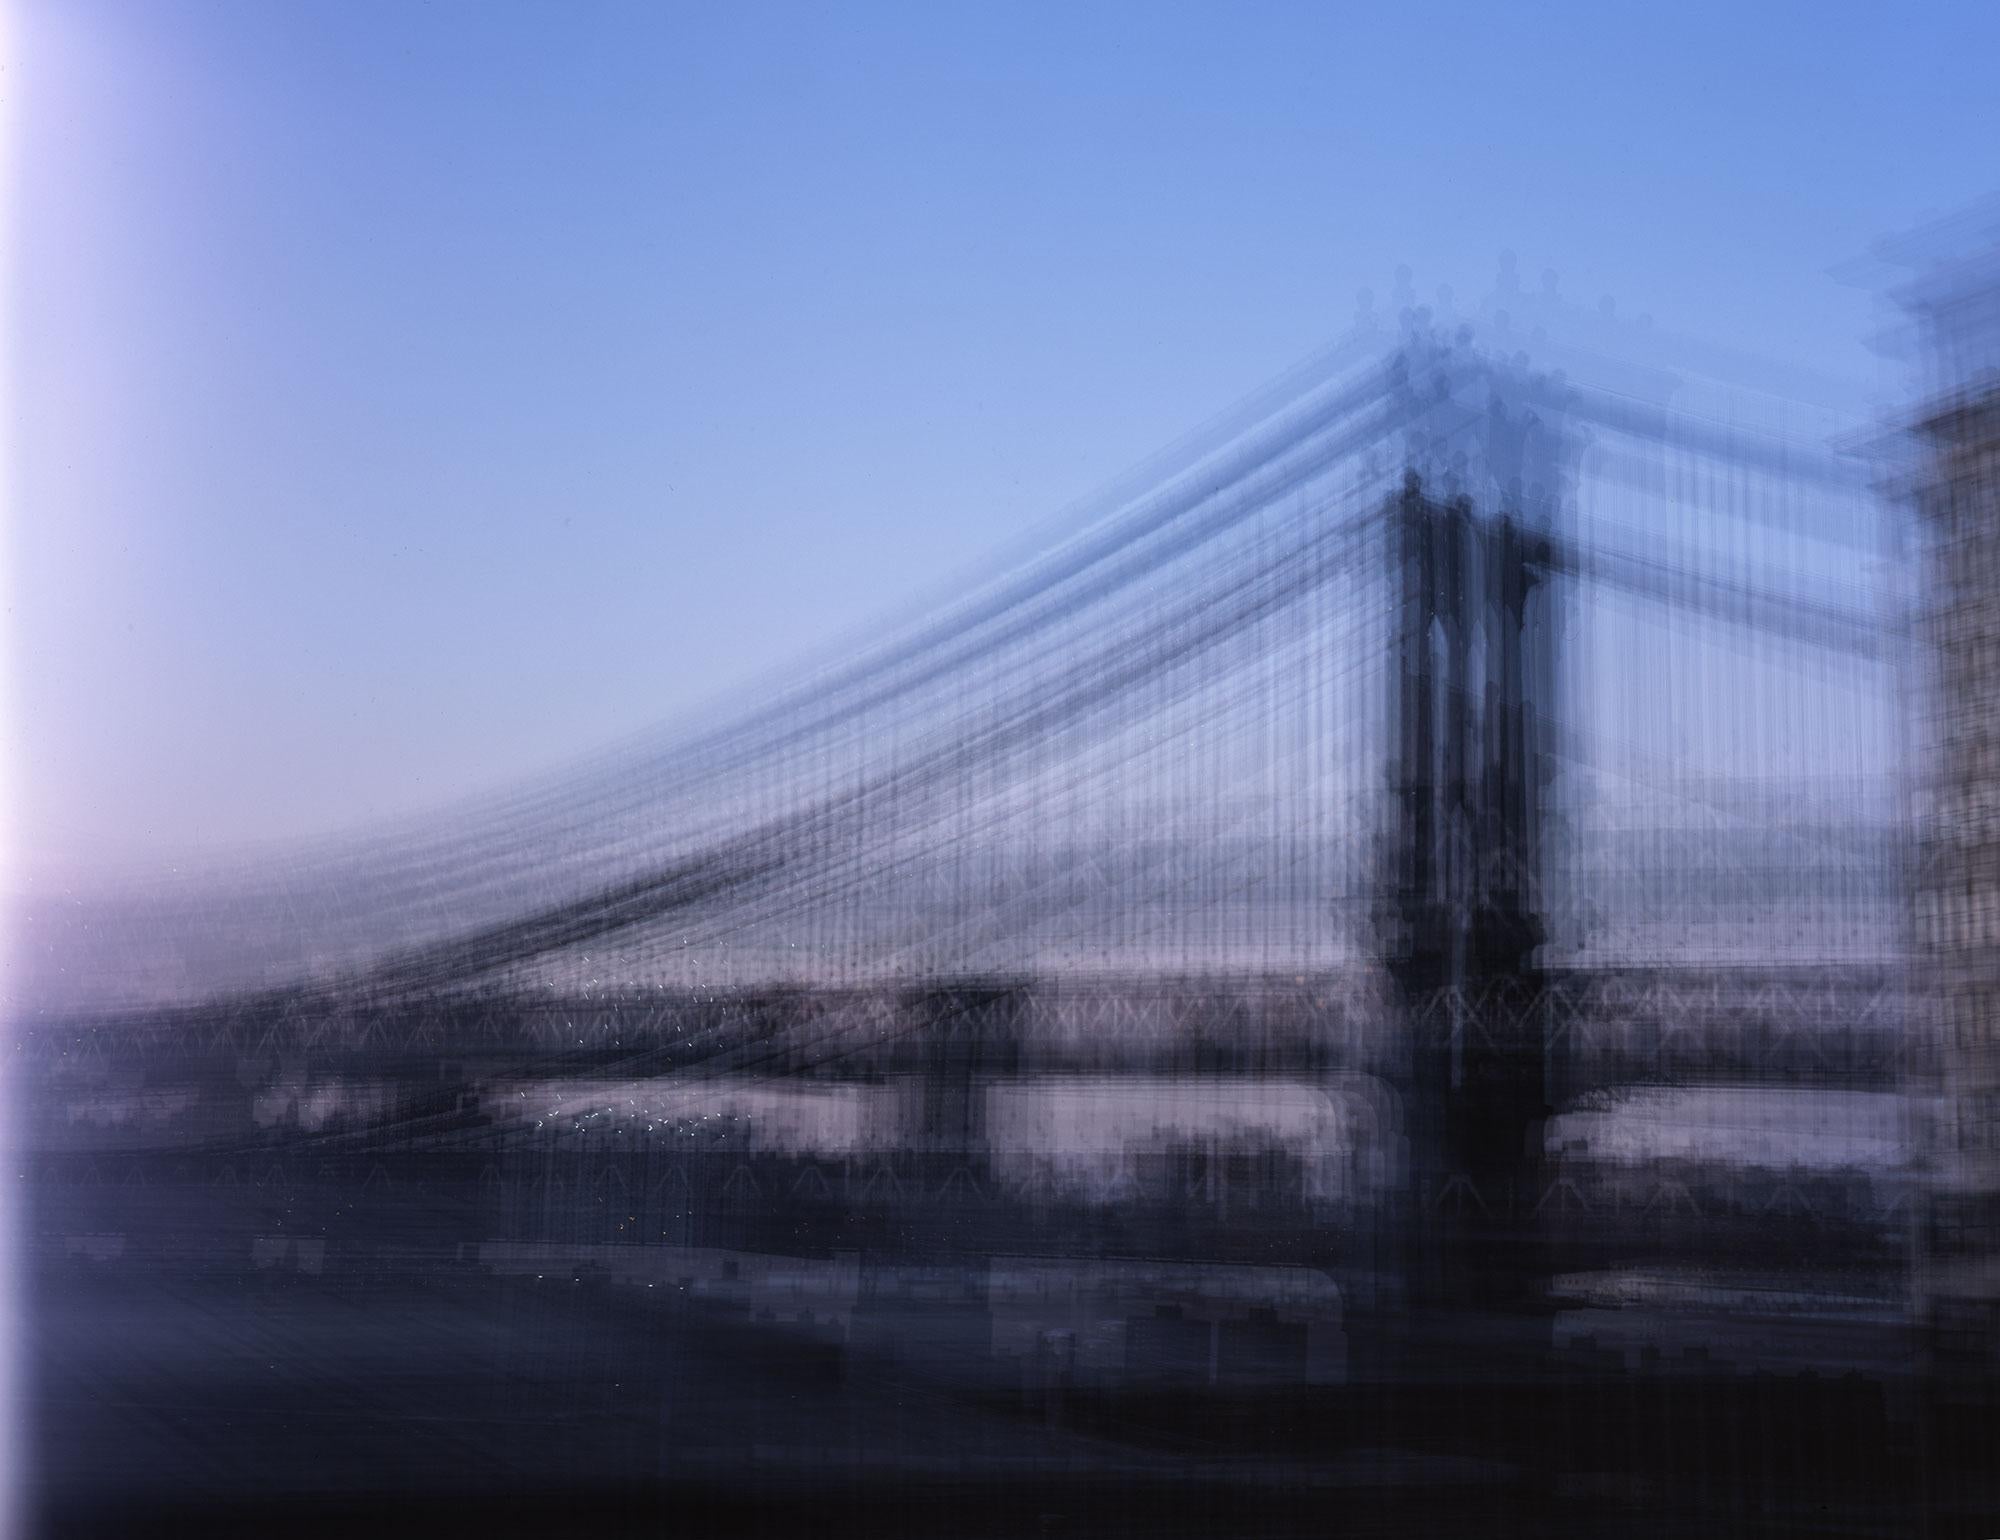 Poby Abstract Photograph - Manhattan Bridge, New York